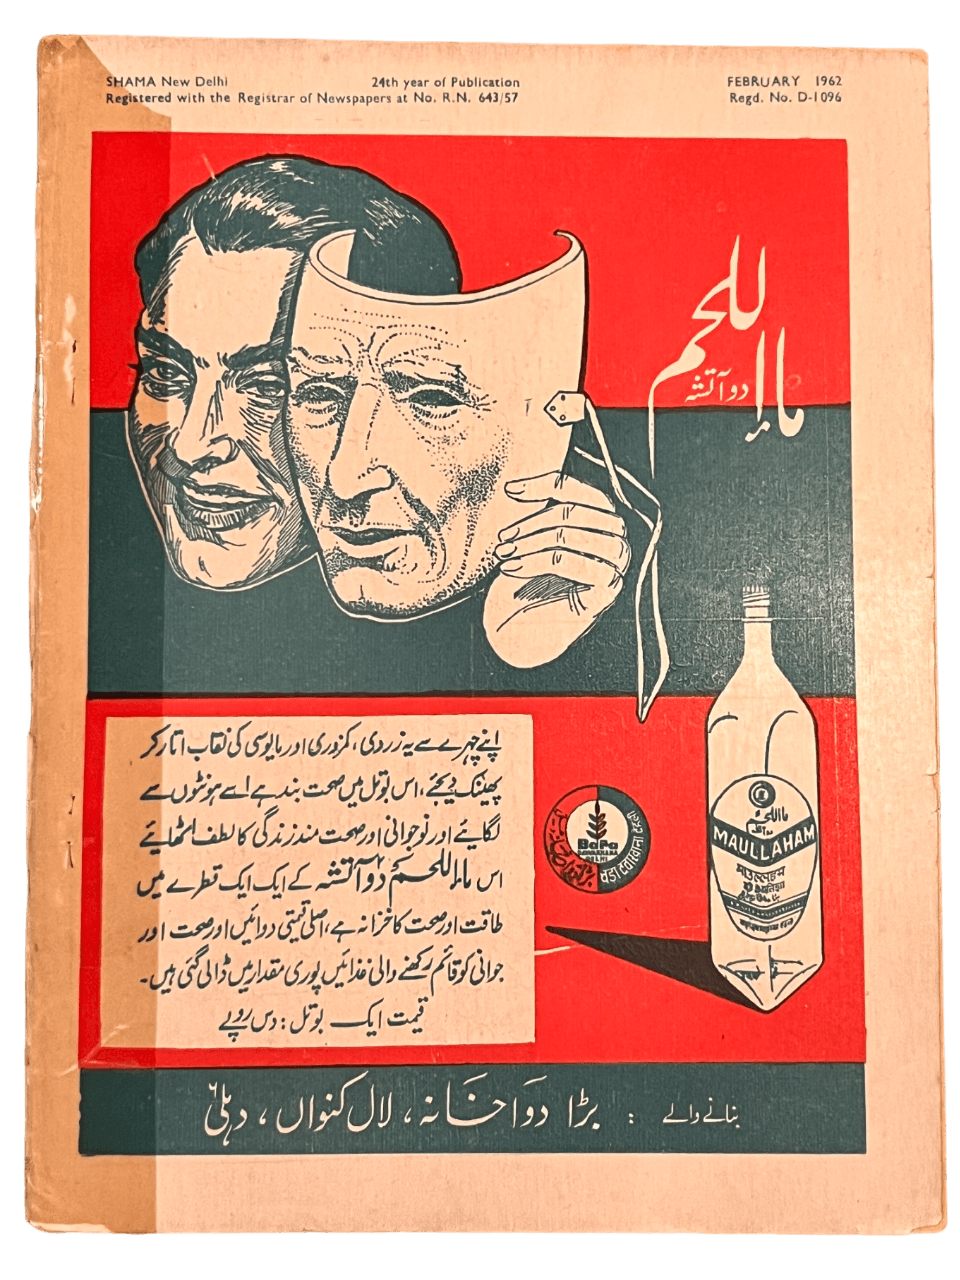 Shama (Feb, 1962) - KHAJISTAN™